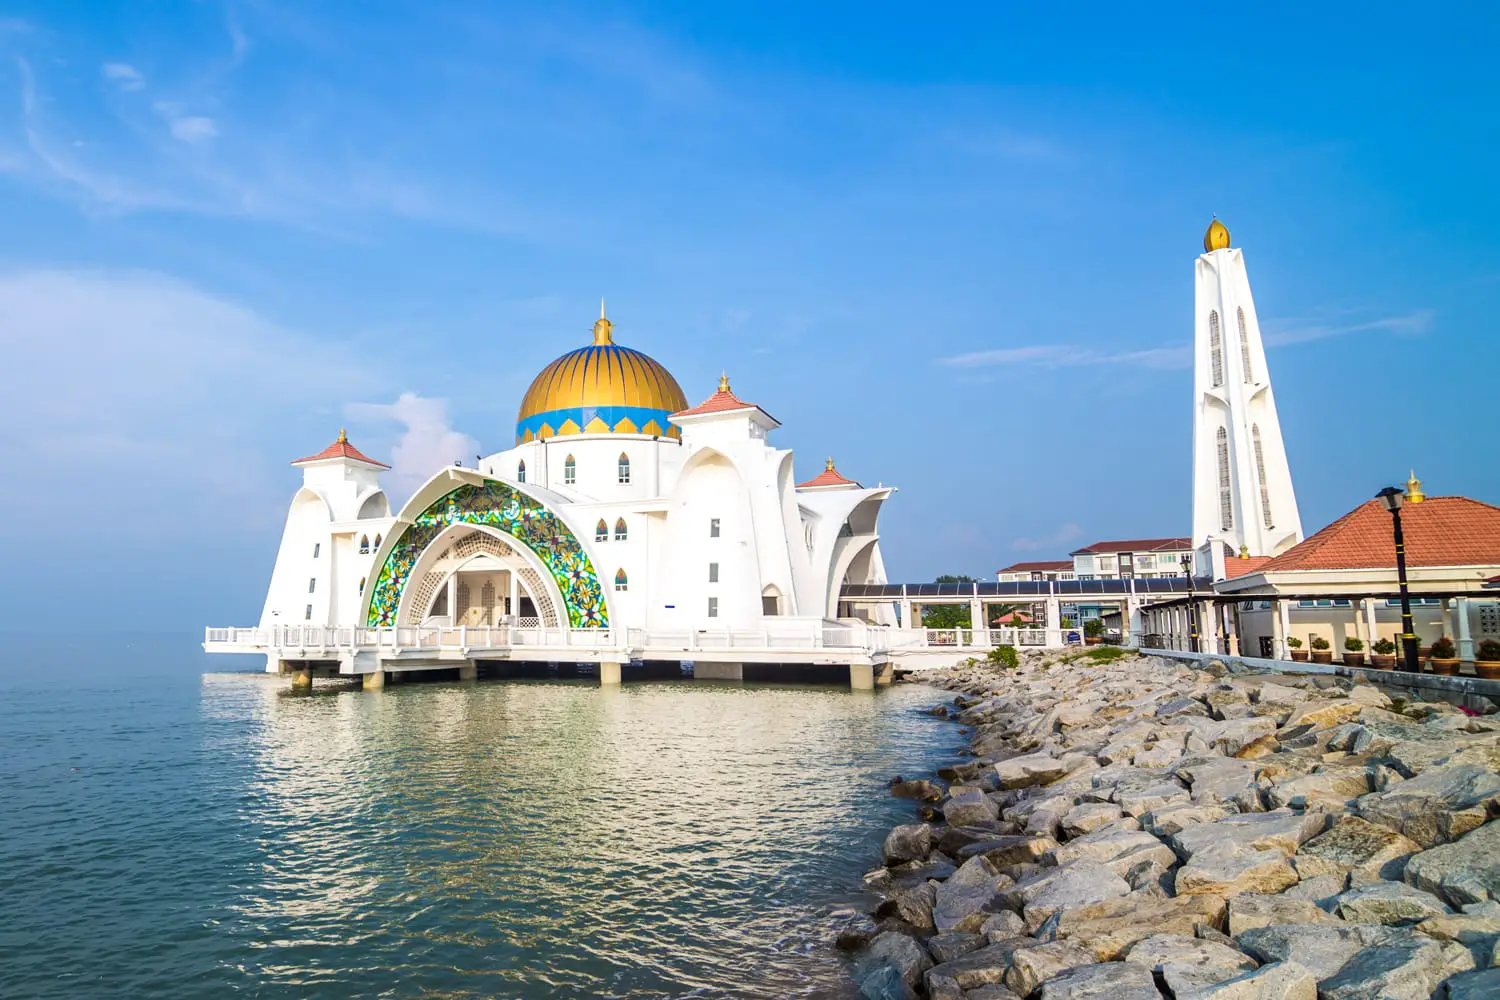 Malacca Straits Mosque ( Masjid Selat Melaka) located on the man-made Malacca Island near Malacca city, Malaysia